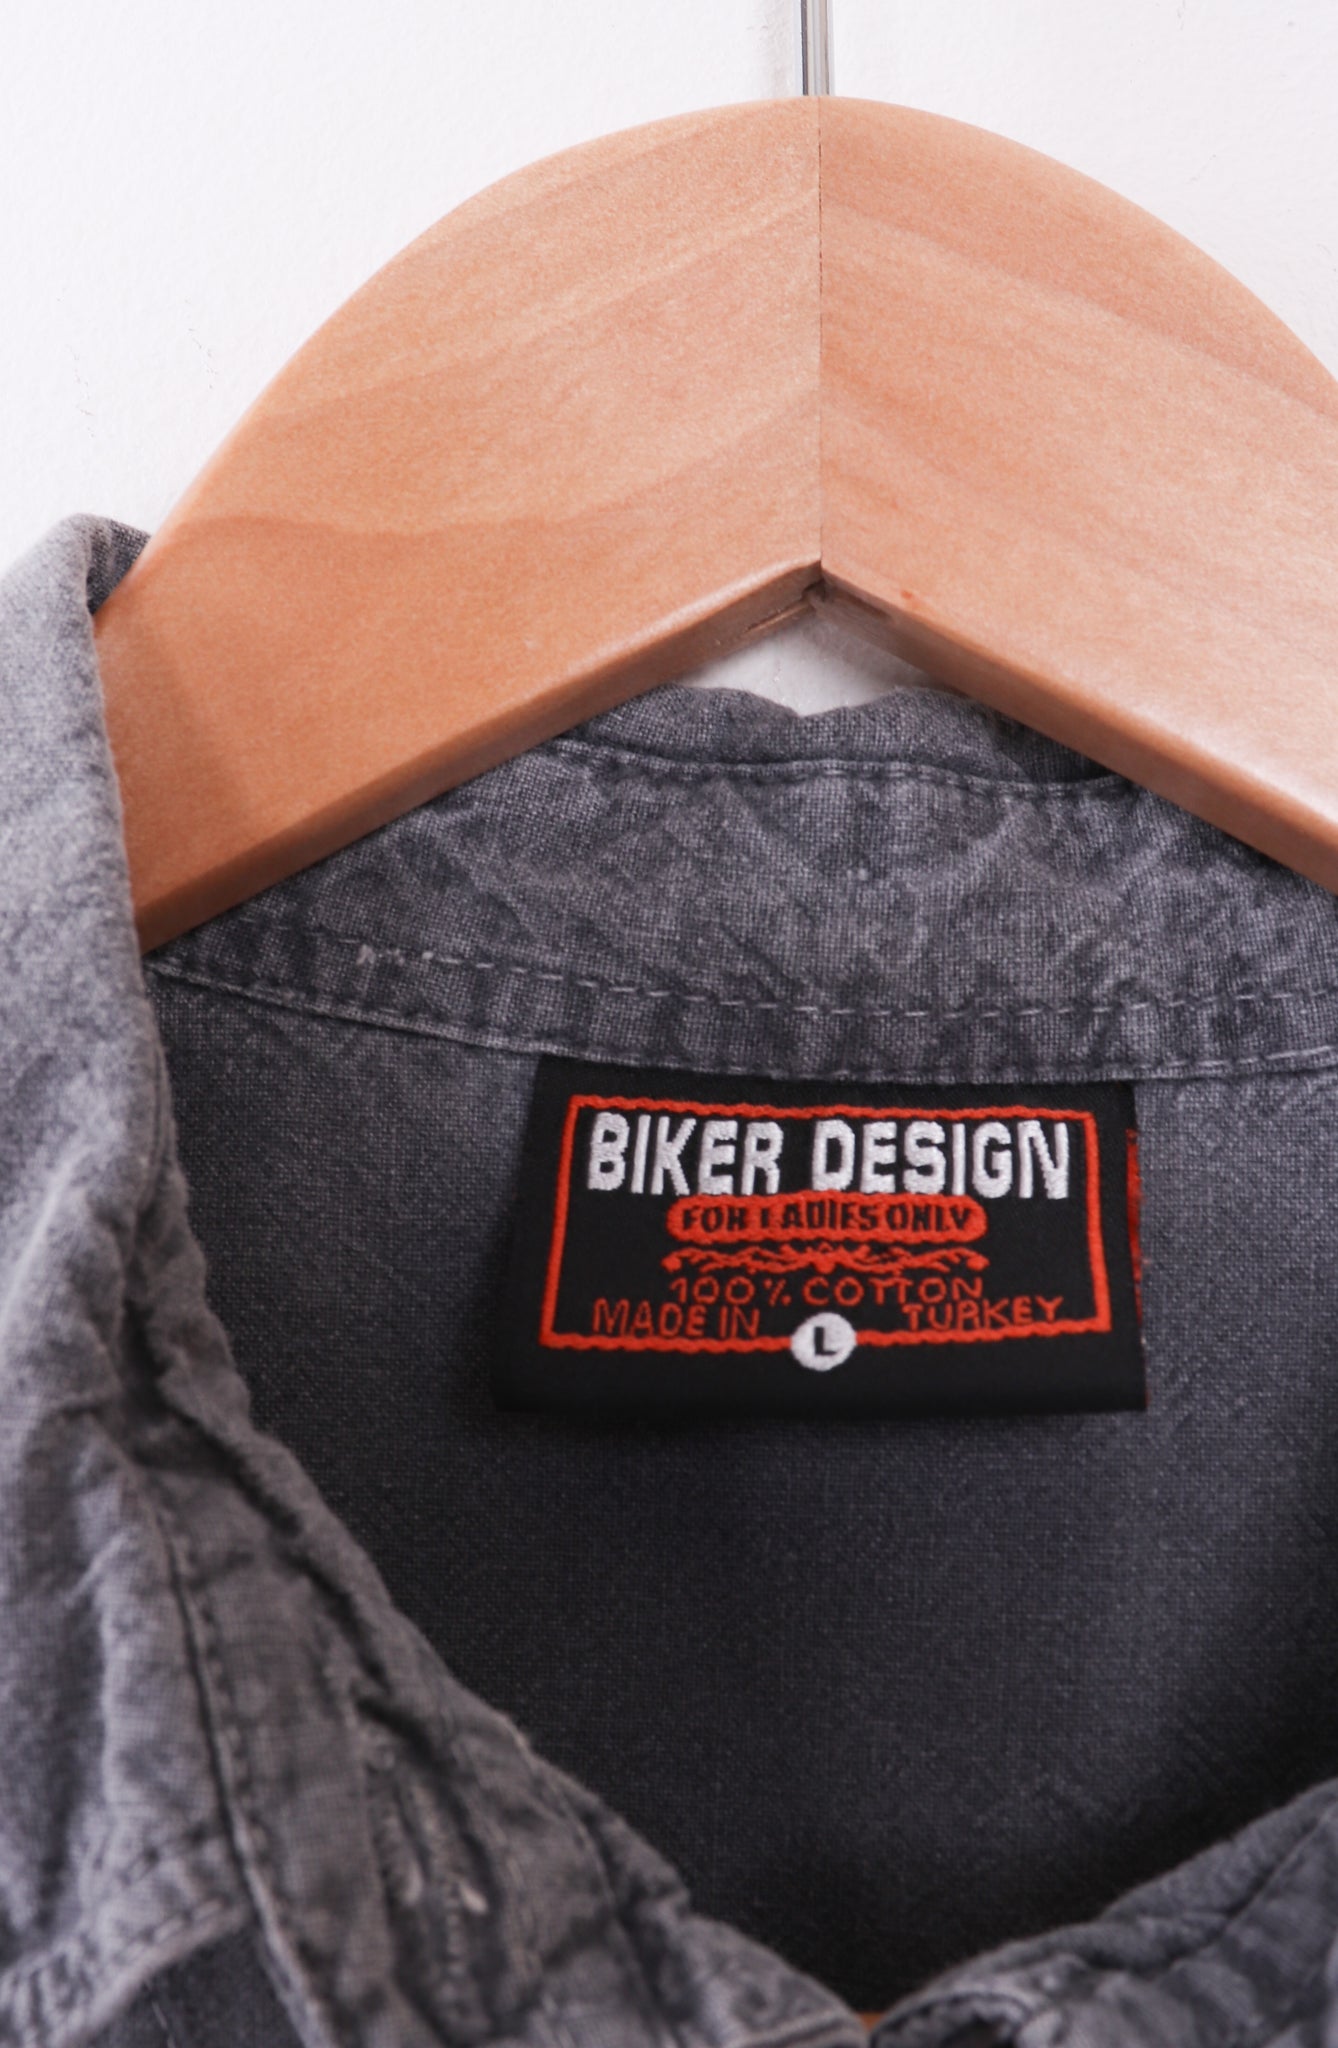 Biker Design Sturgis 2000 Anniversary Blouse Vest